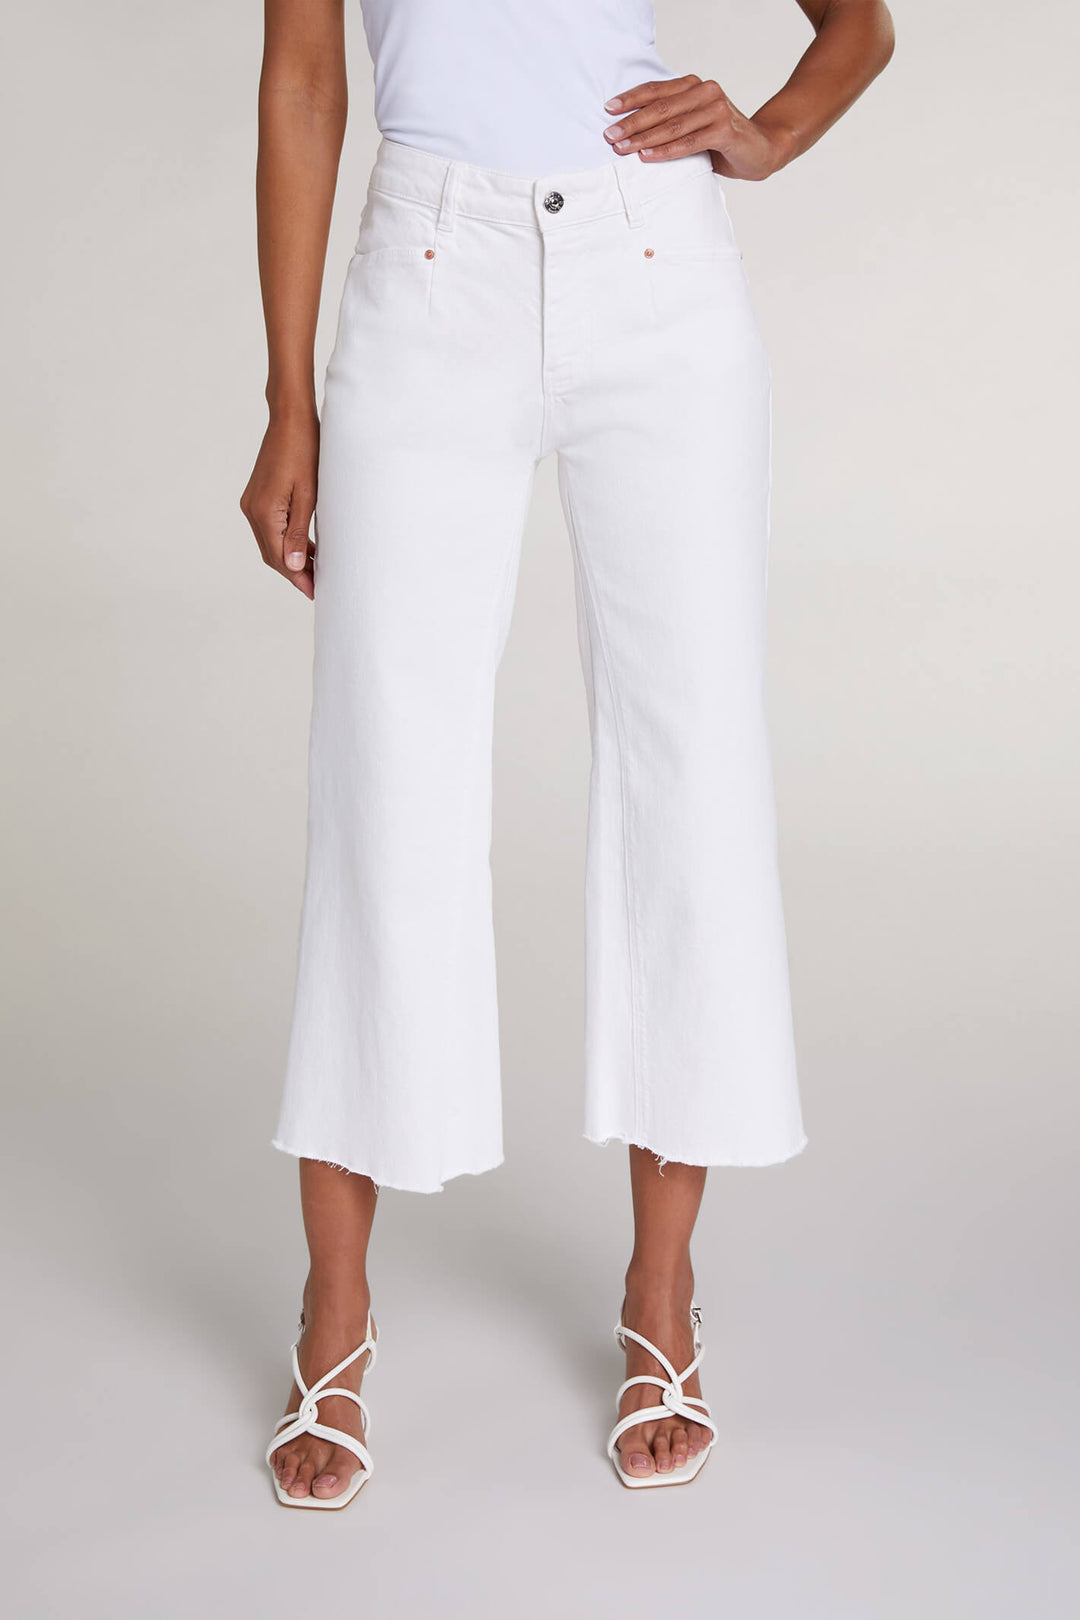 Oui 72490 White Cropped Raw Edge Flared Jeans - Olivia Grace Fashion